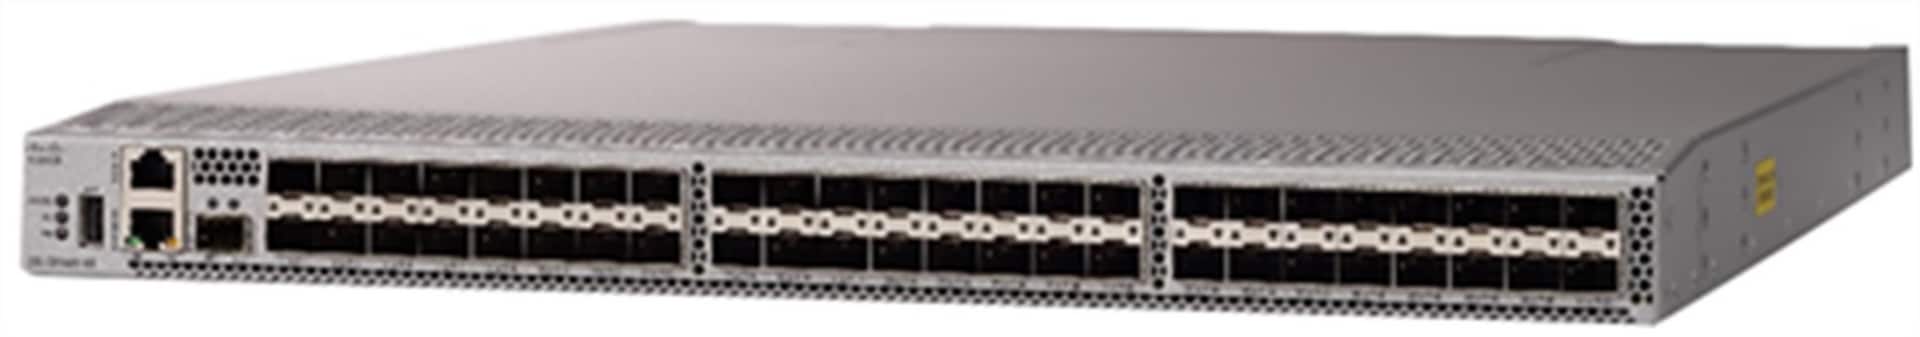 NetApp Cisco MDS 9148T 24-Port 32Gbps Fiber Channel Switch